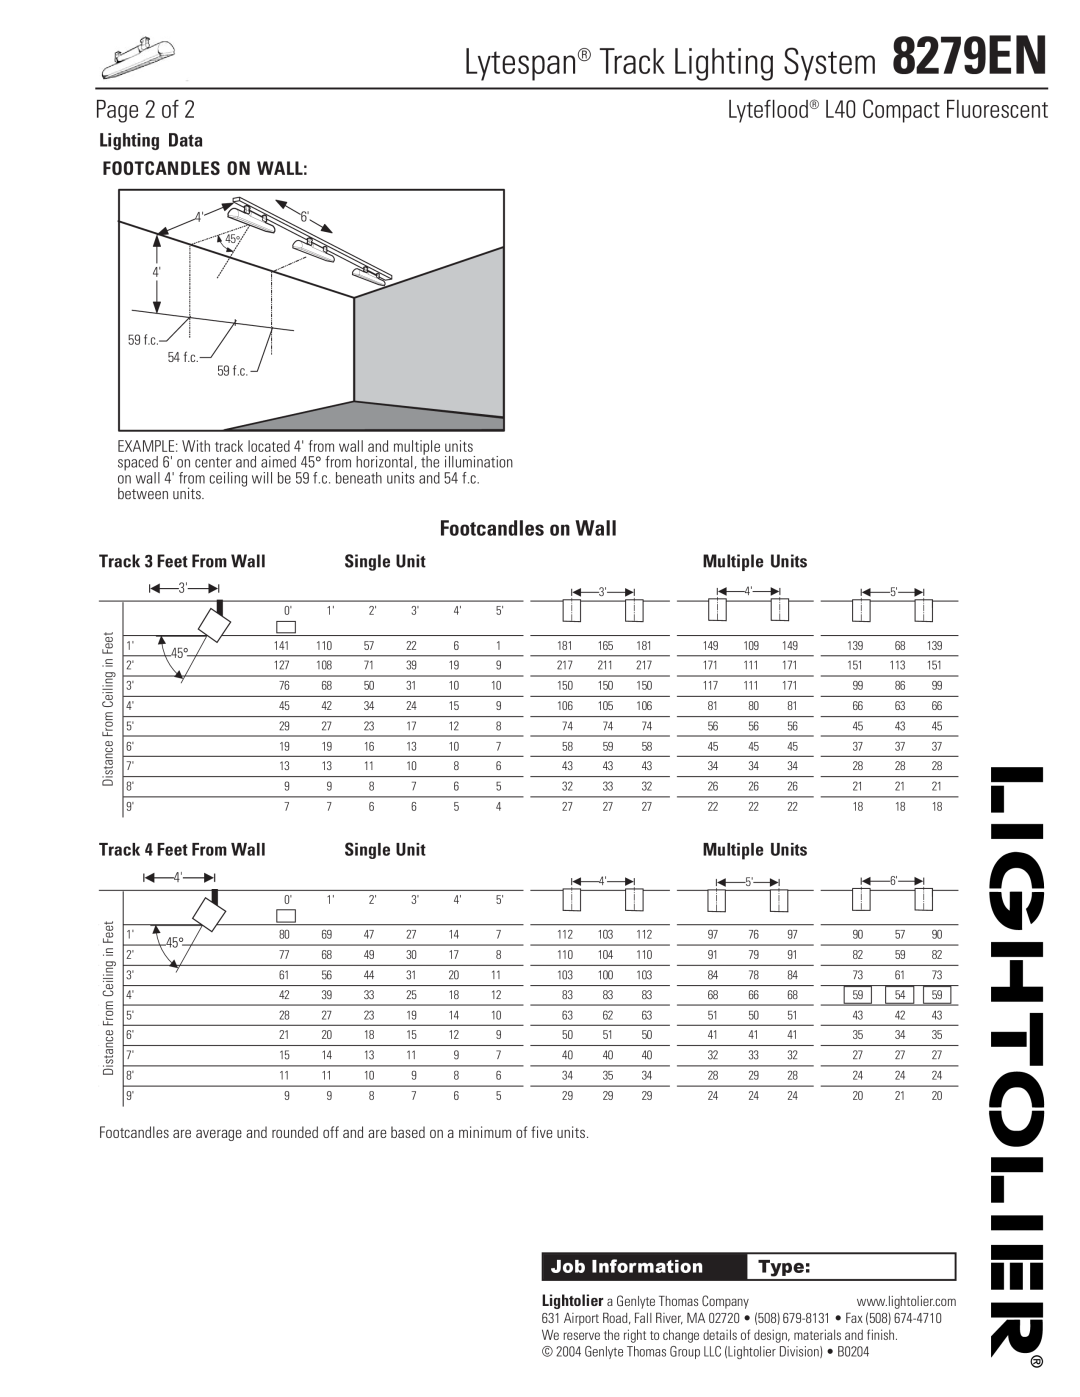 Lightolier Page 2 of, Multiple Units, Lytespan Track Lighting System 8279EN, Lyteflood L40 Compact Fluorescent, Type 